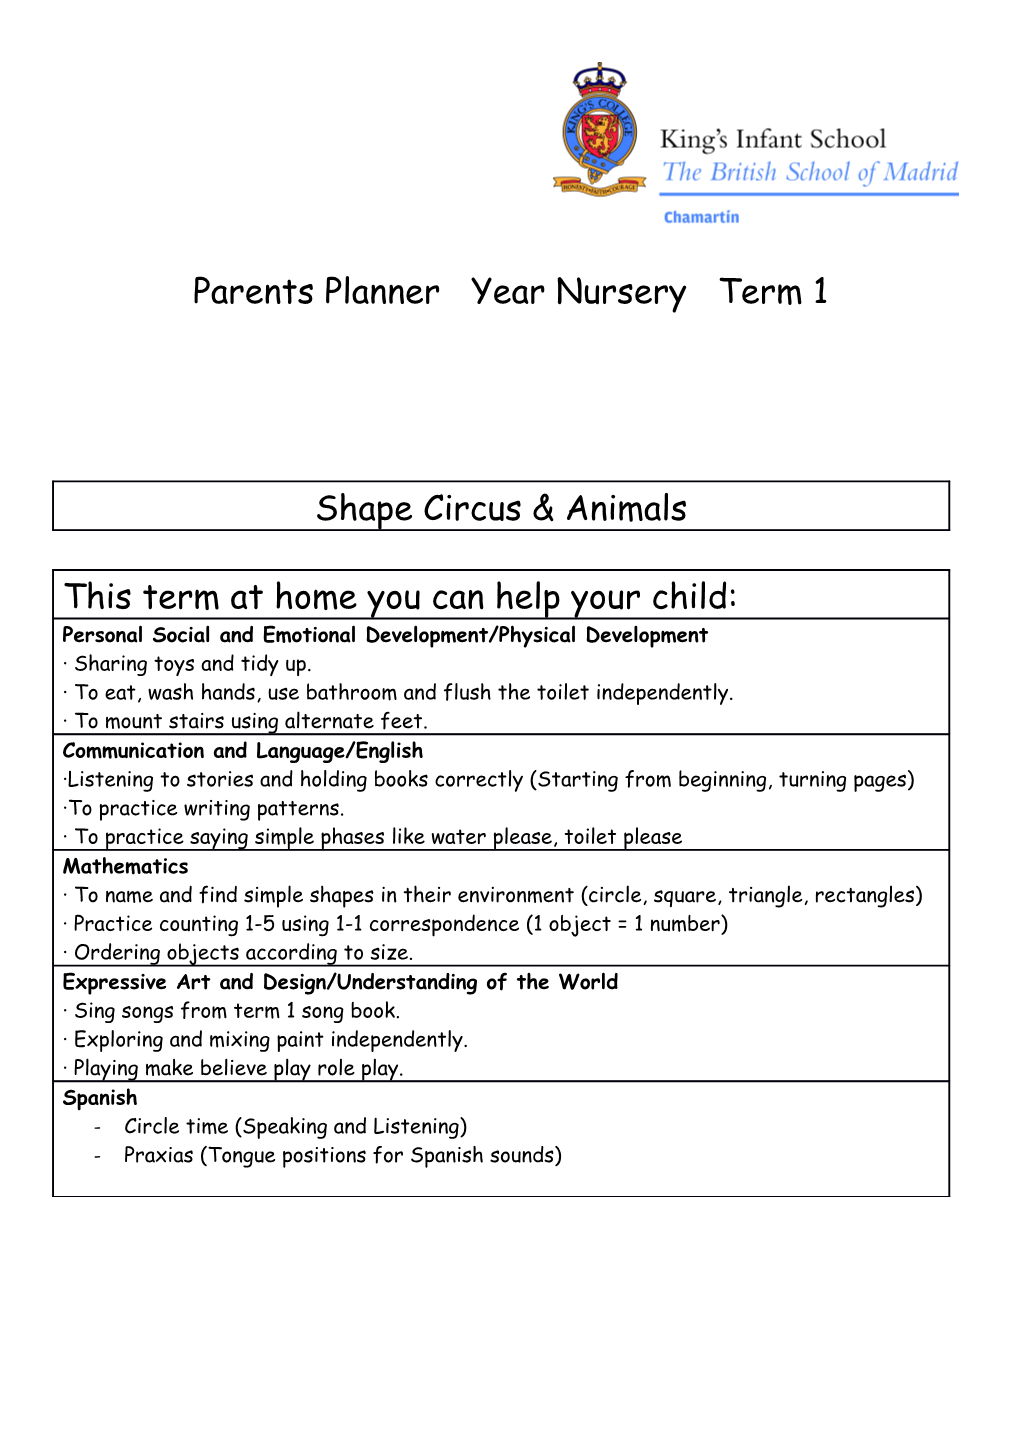 Parents Planner Year Nursery Term 1